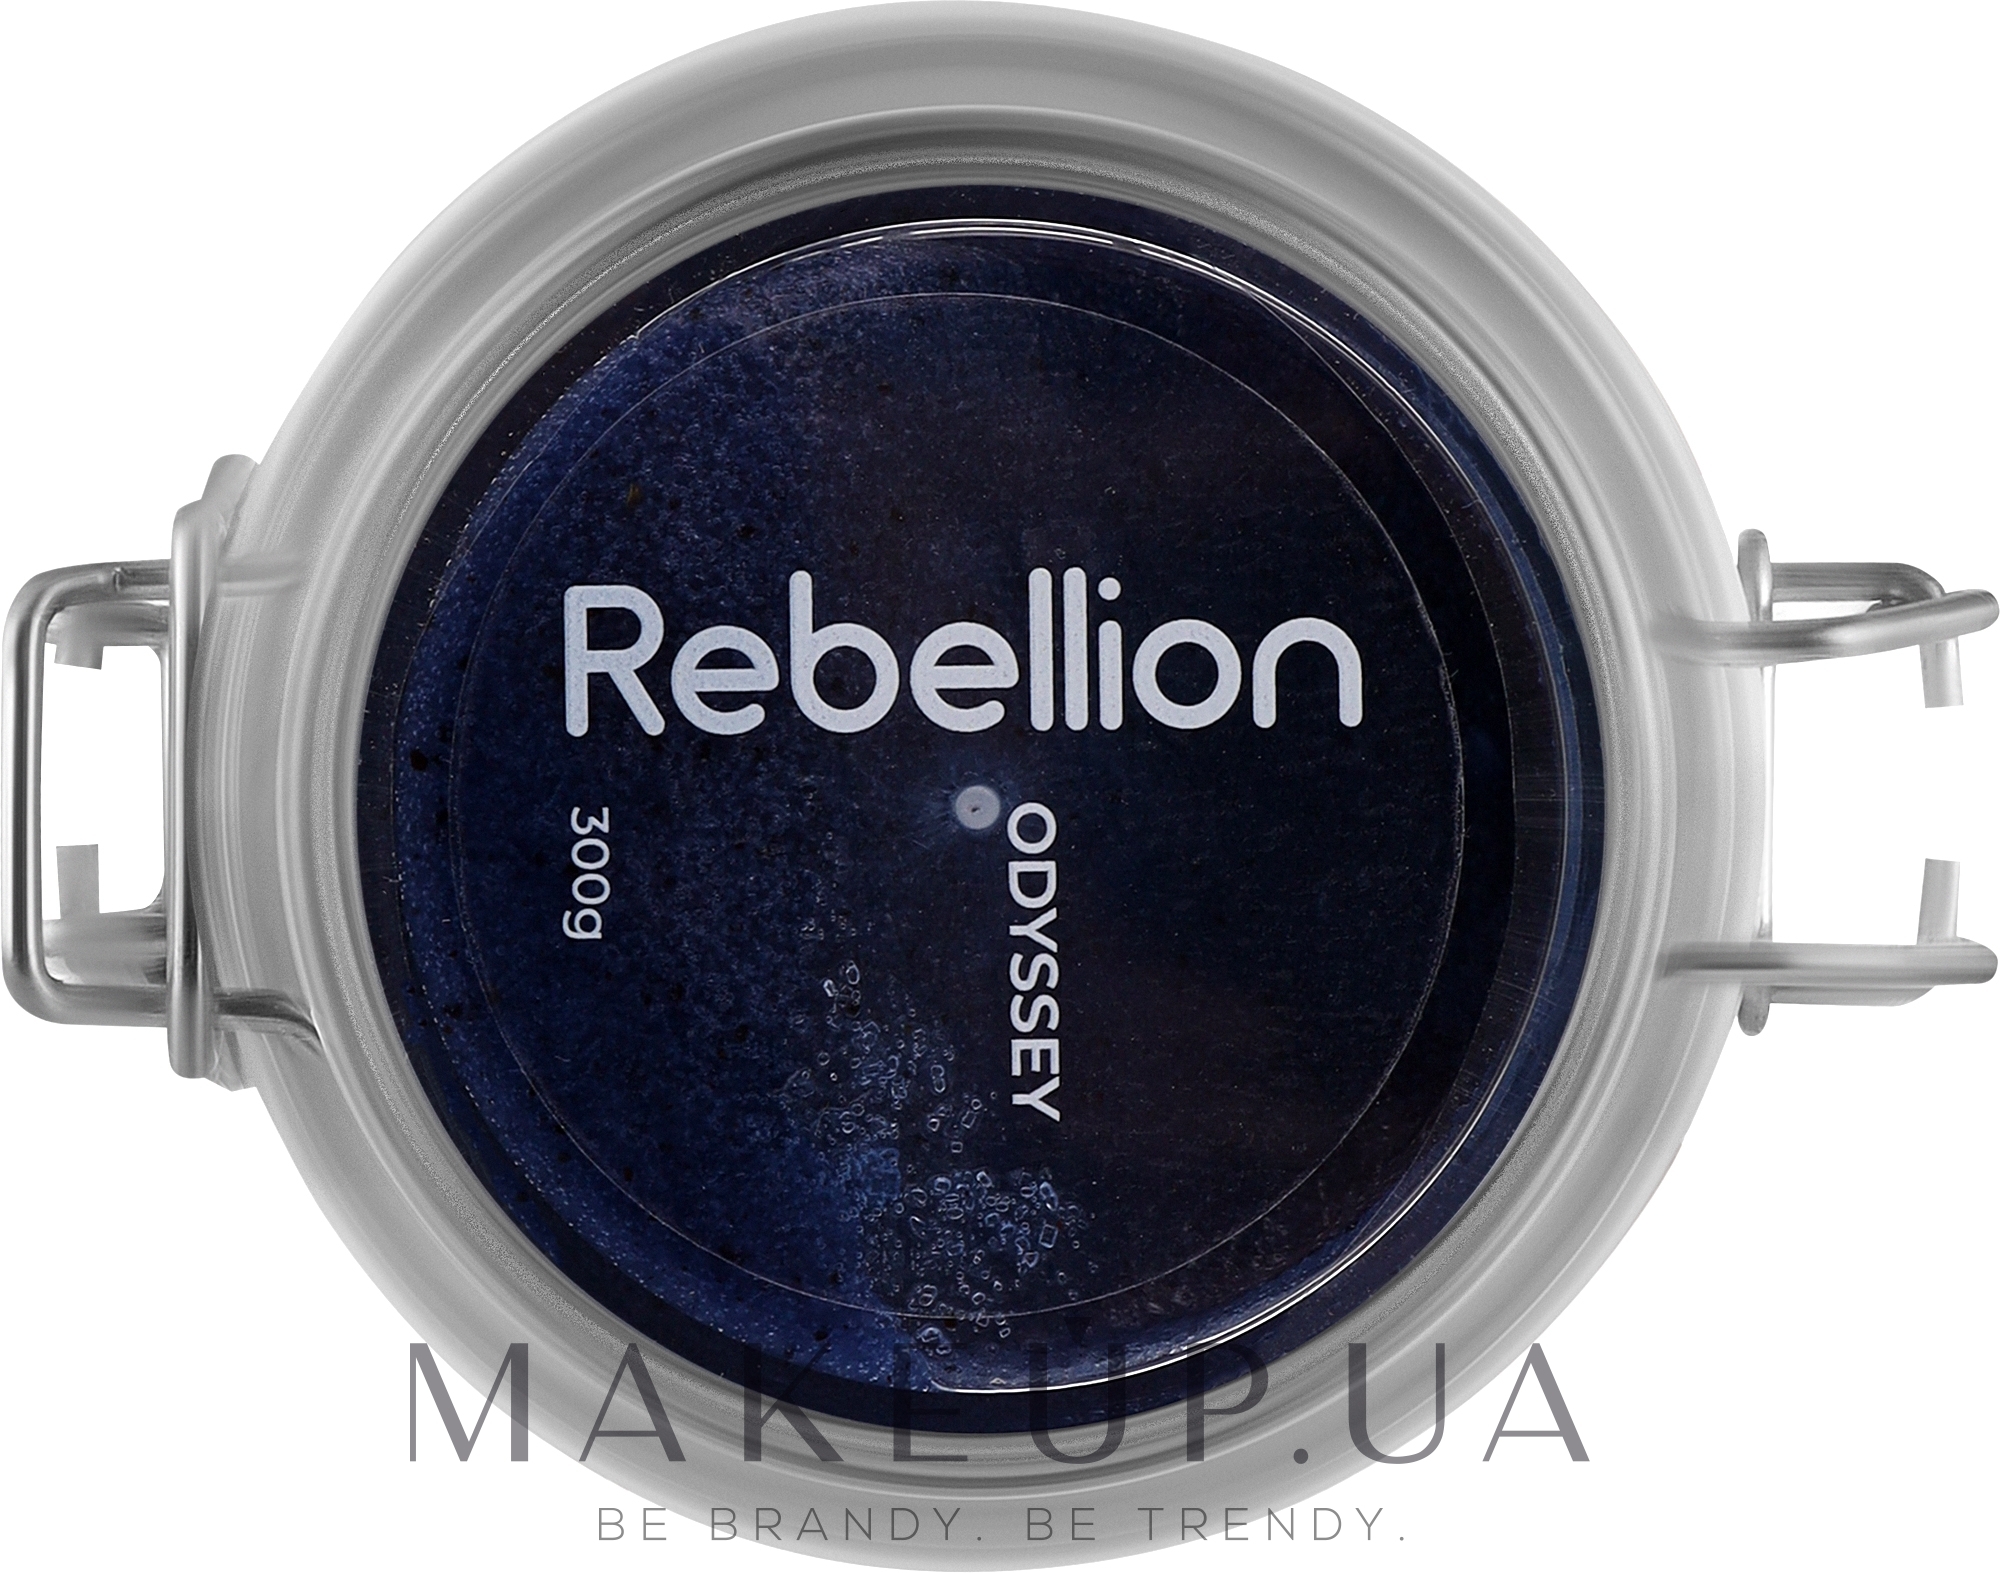 Rebellion Odyssey - Парфюмированный скраб для тела — фото 300g